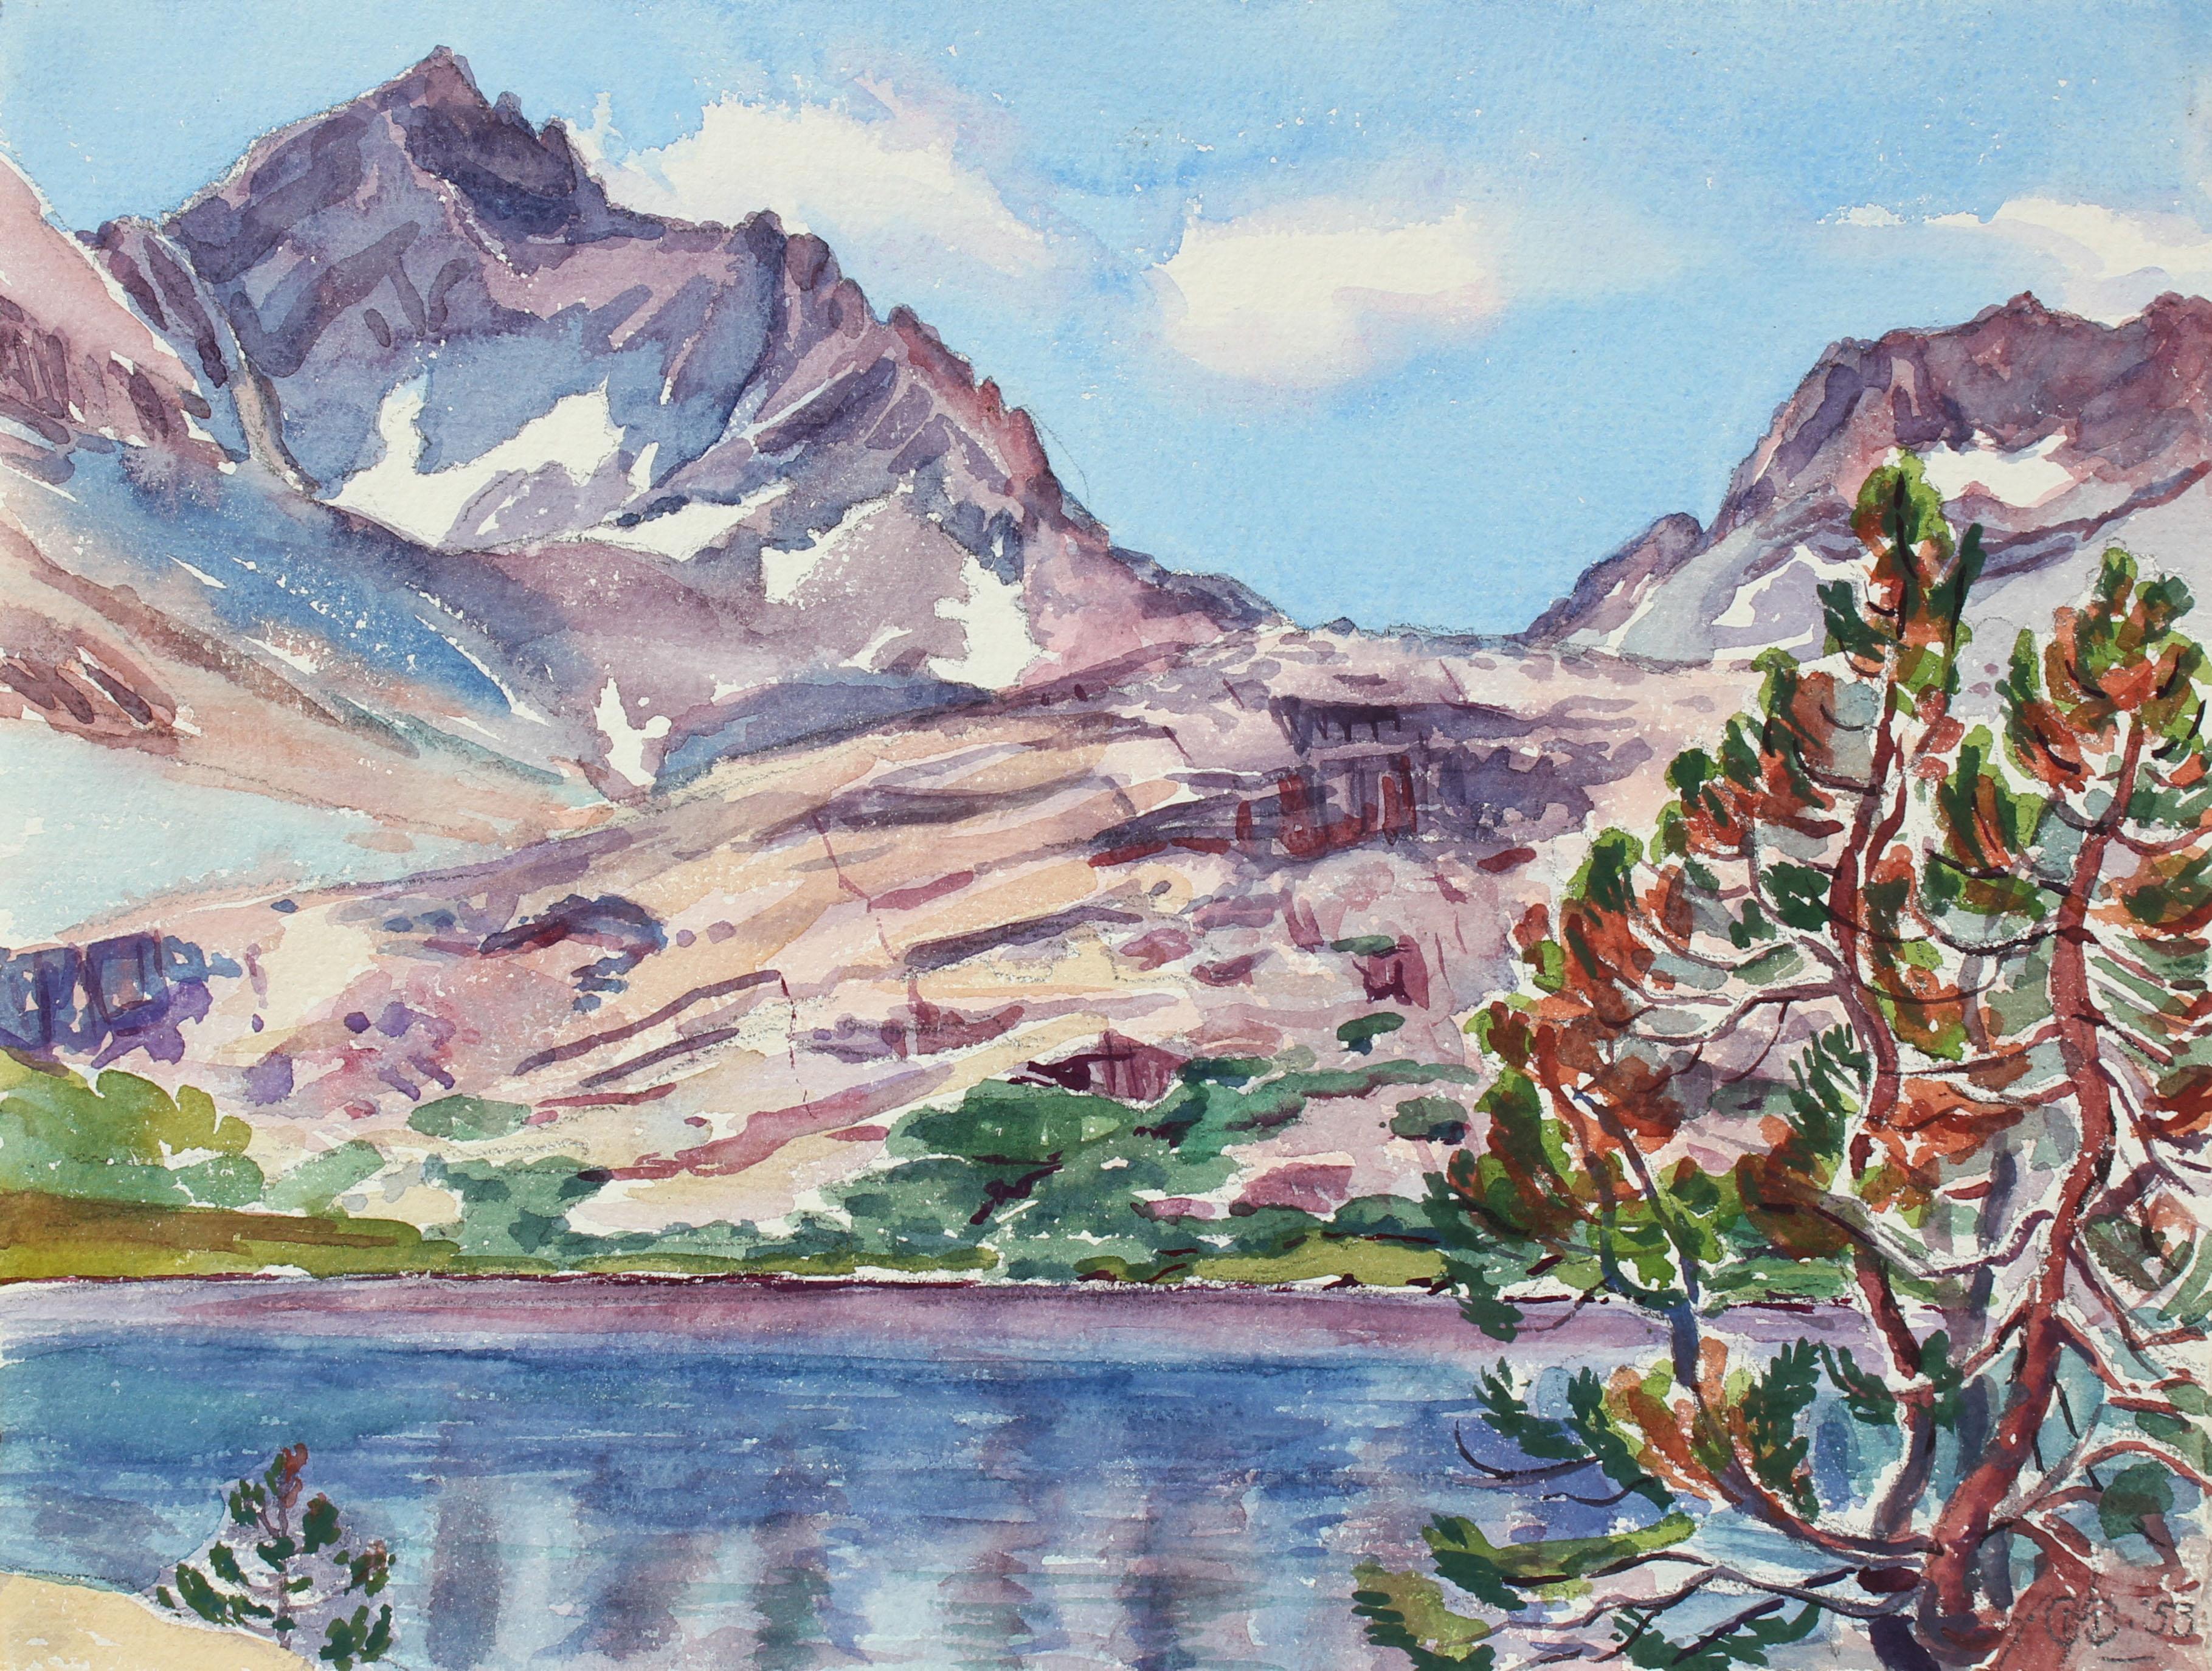 Mary Pomeroy Landscape Art - 1950s Vibrant Mountain Scene in Watercolor